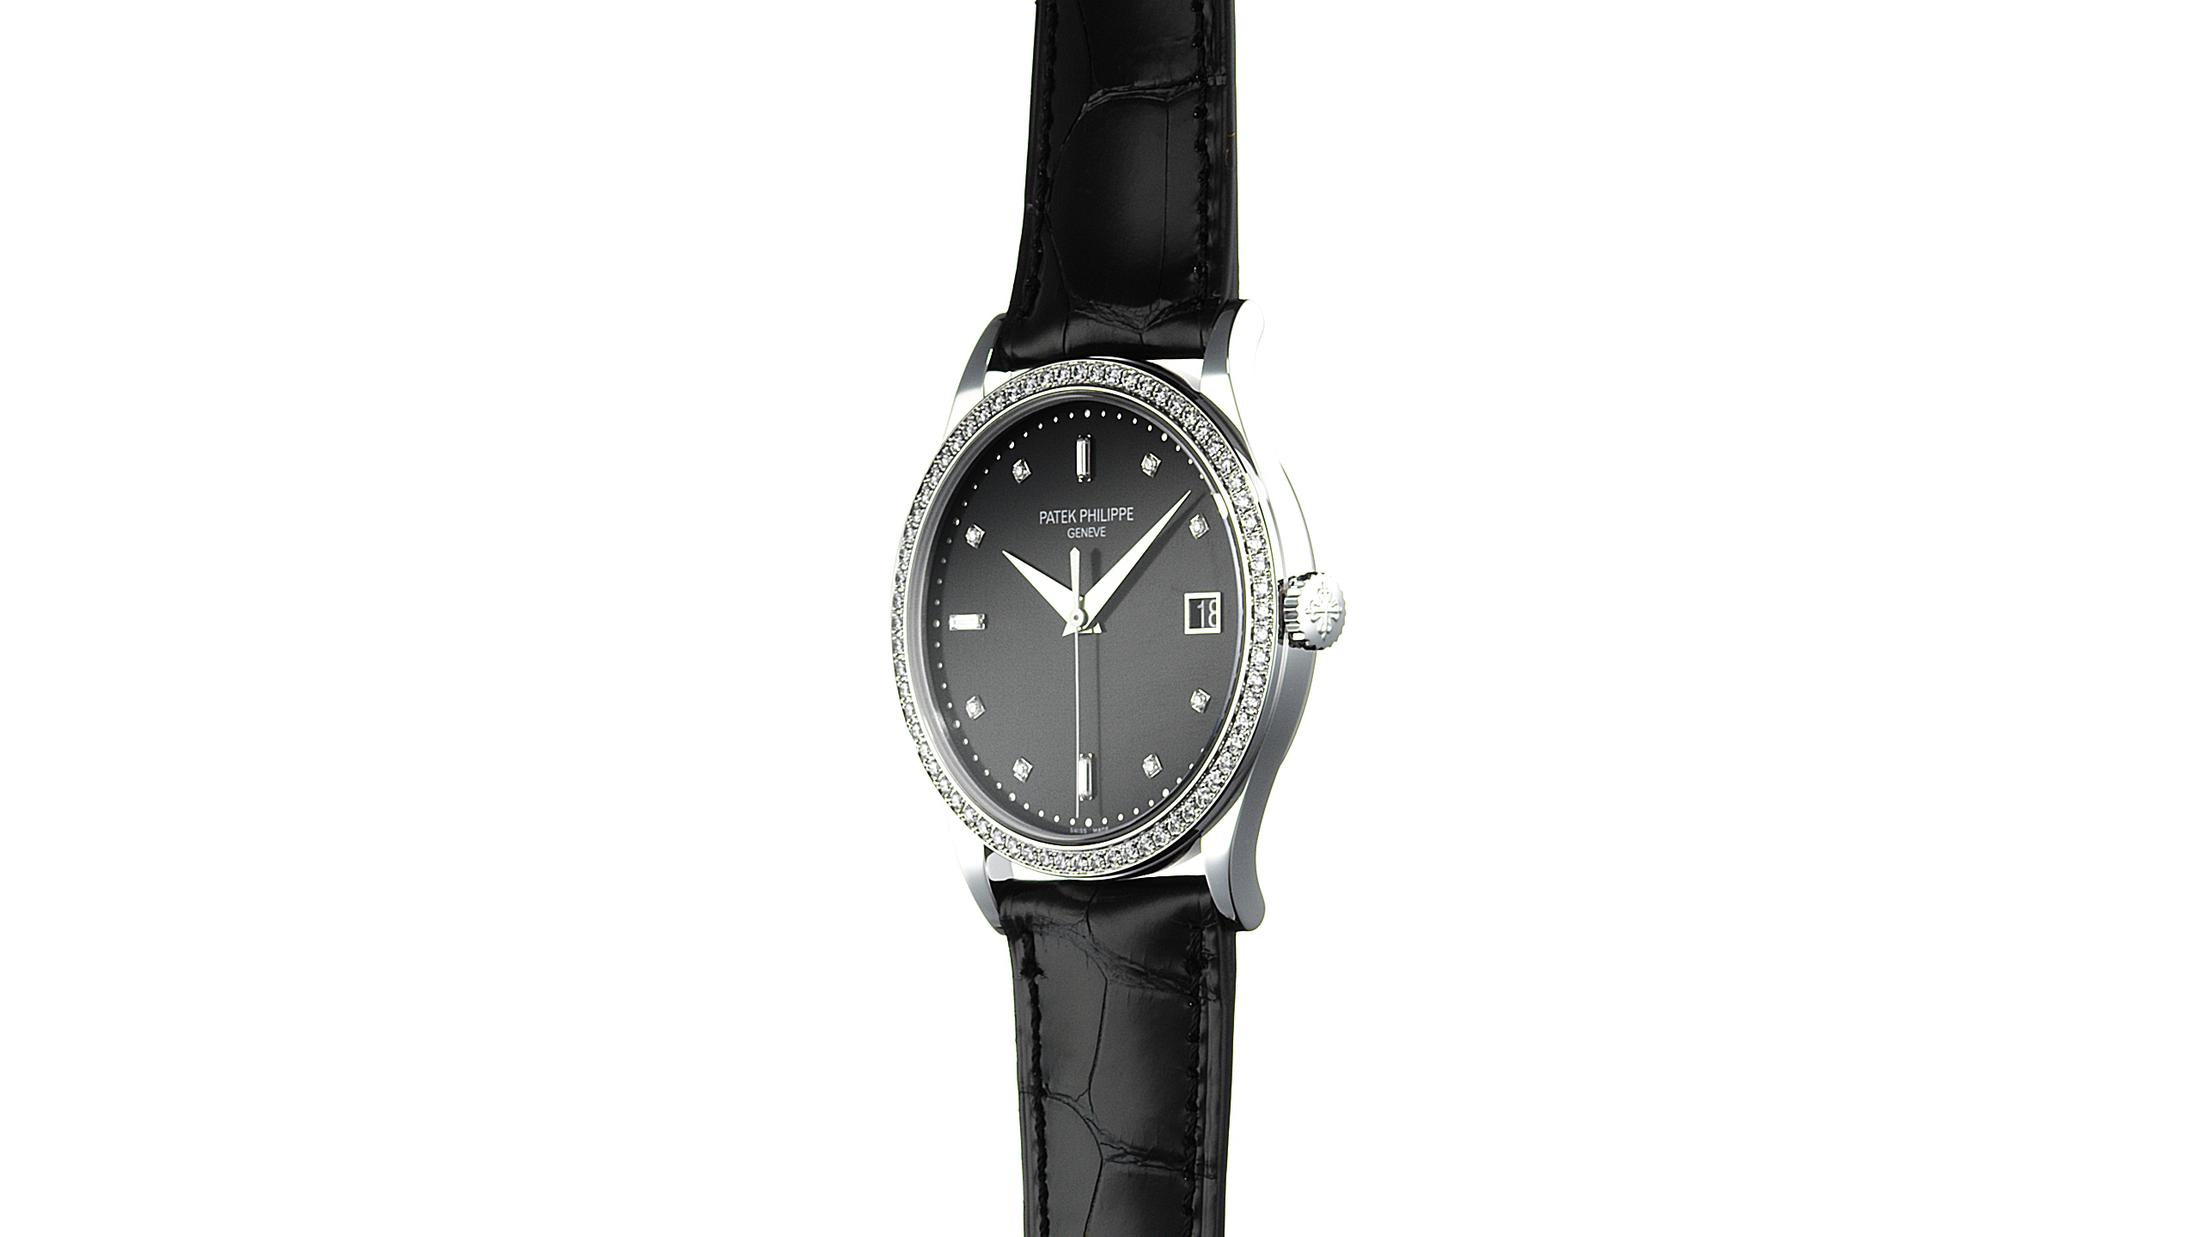 Patek Philippe Patek Philippe Nautilus Chronograph 5980/1A-014 Black Dial Used Watches Men's Watches